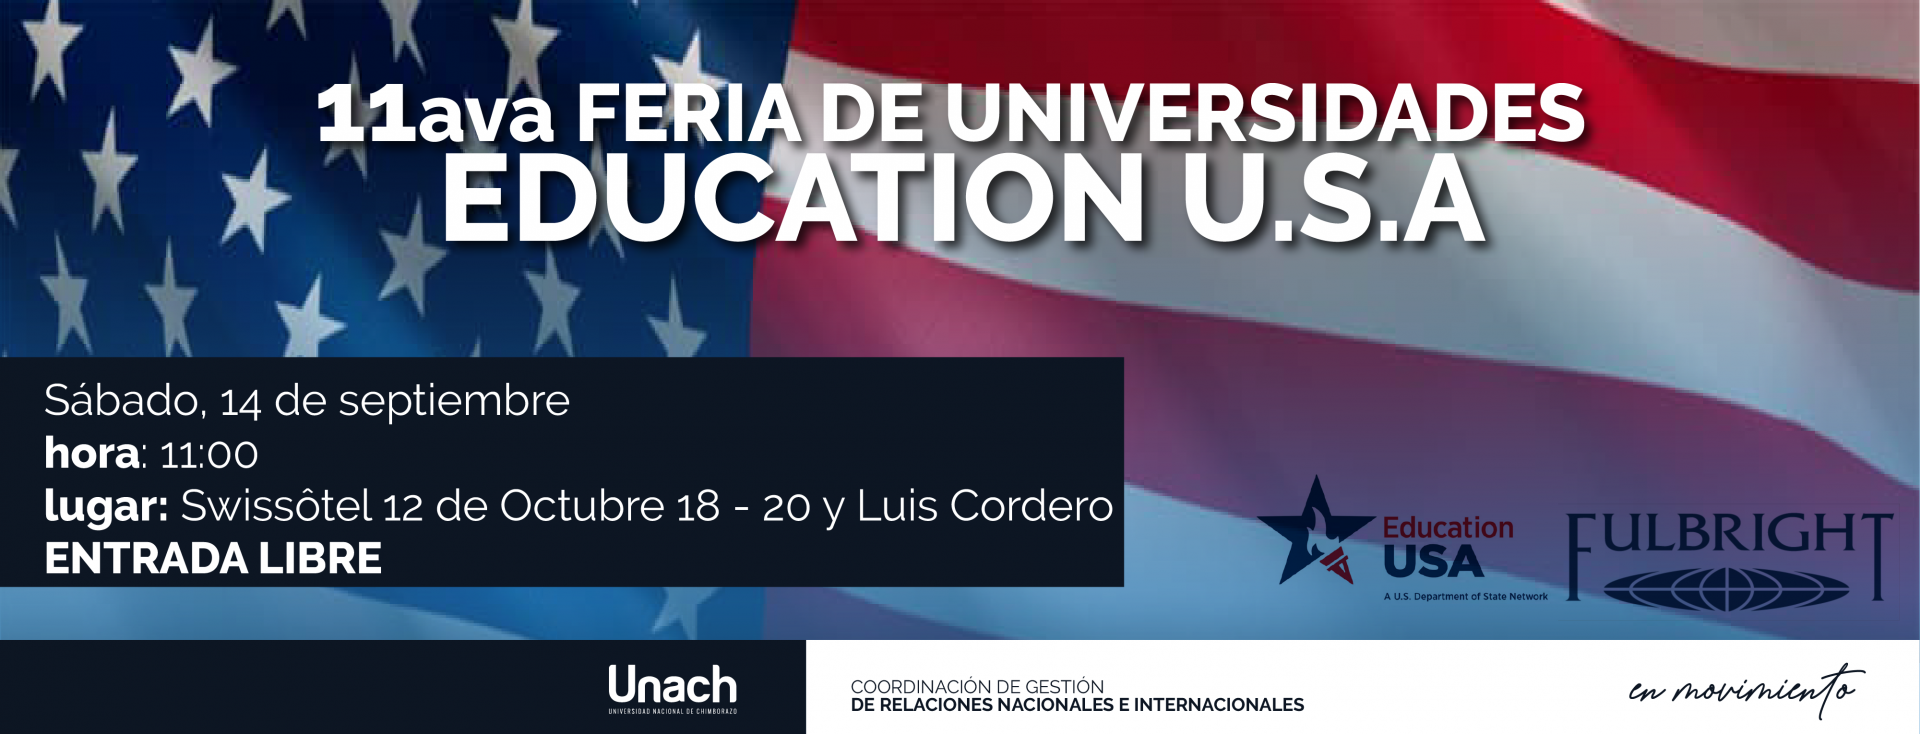 PRIMERA FERIA DE UNIVERSIDADES  EDUCATION U.S.A